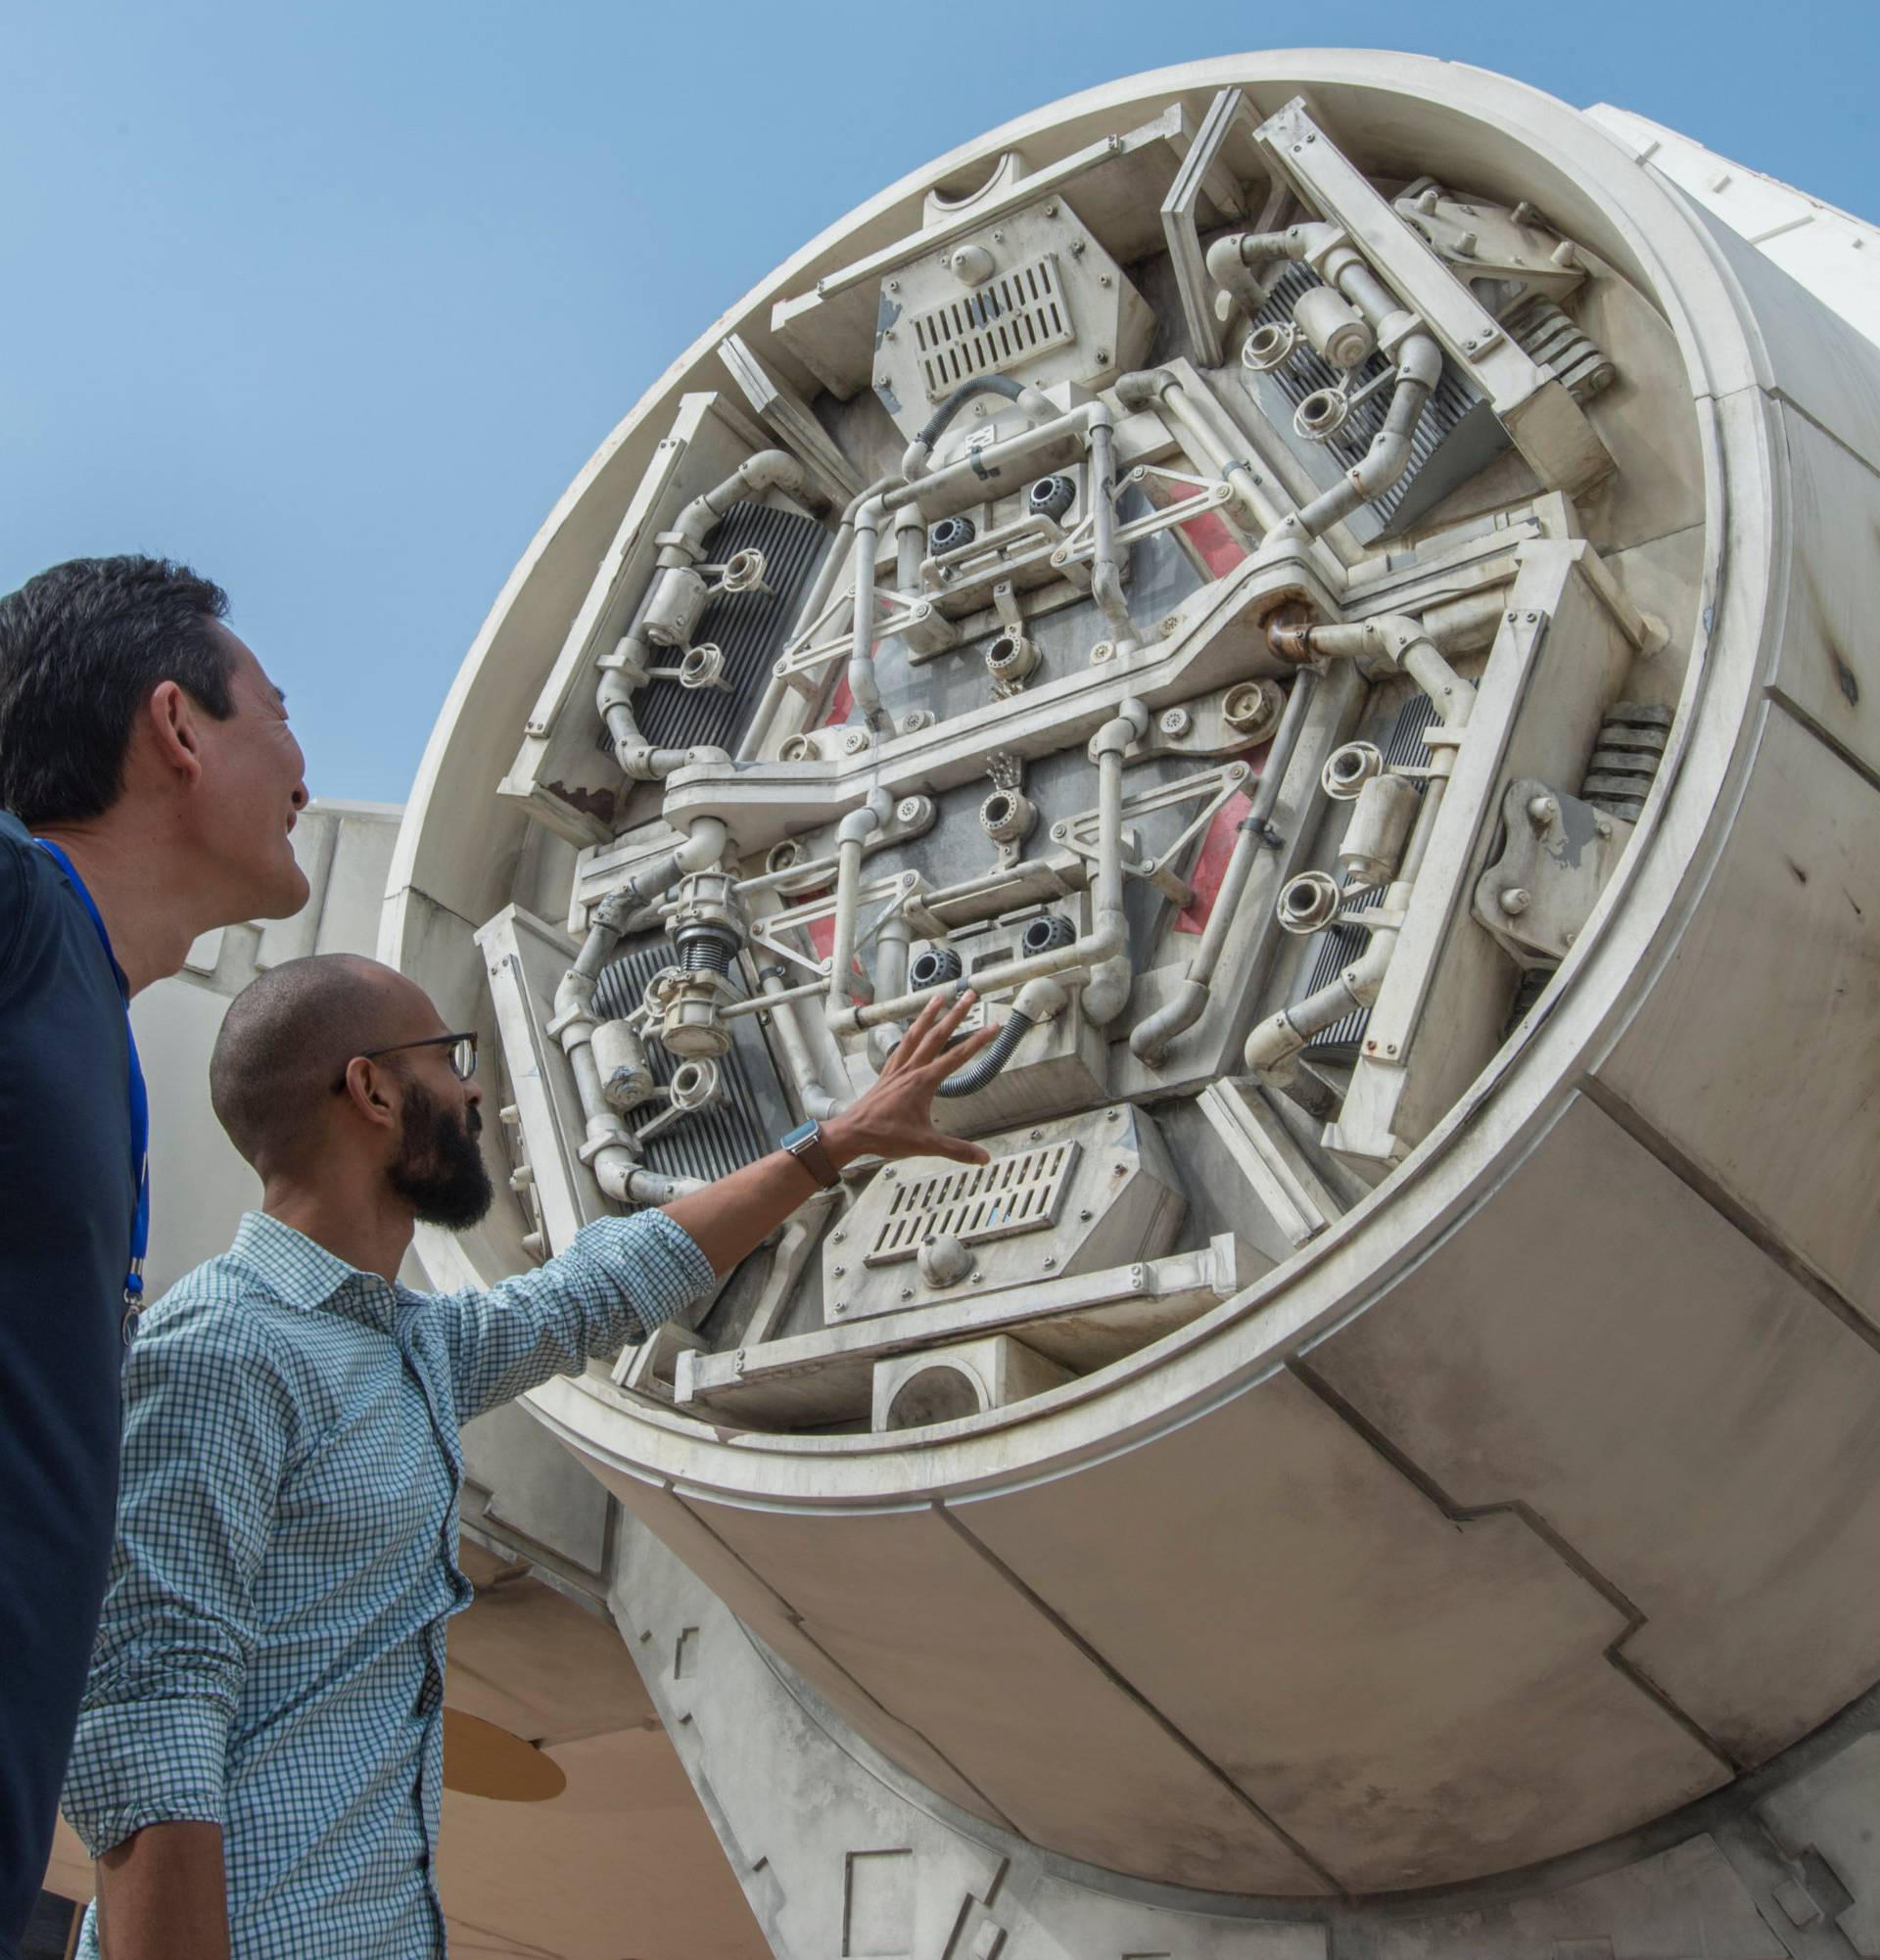 Star Wars Galaxy's Edge Millennium Falcon Smugglers Run exhibit under development